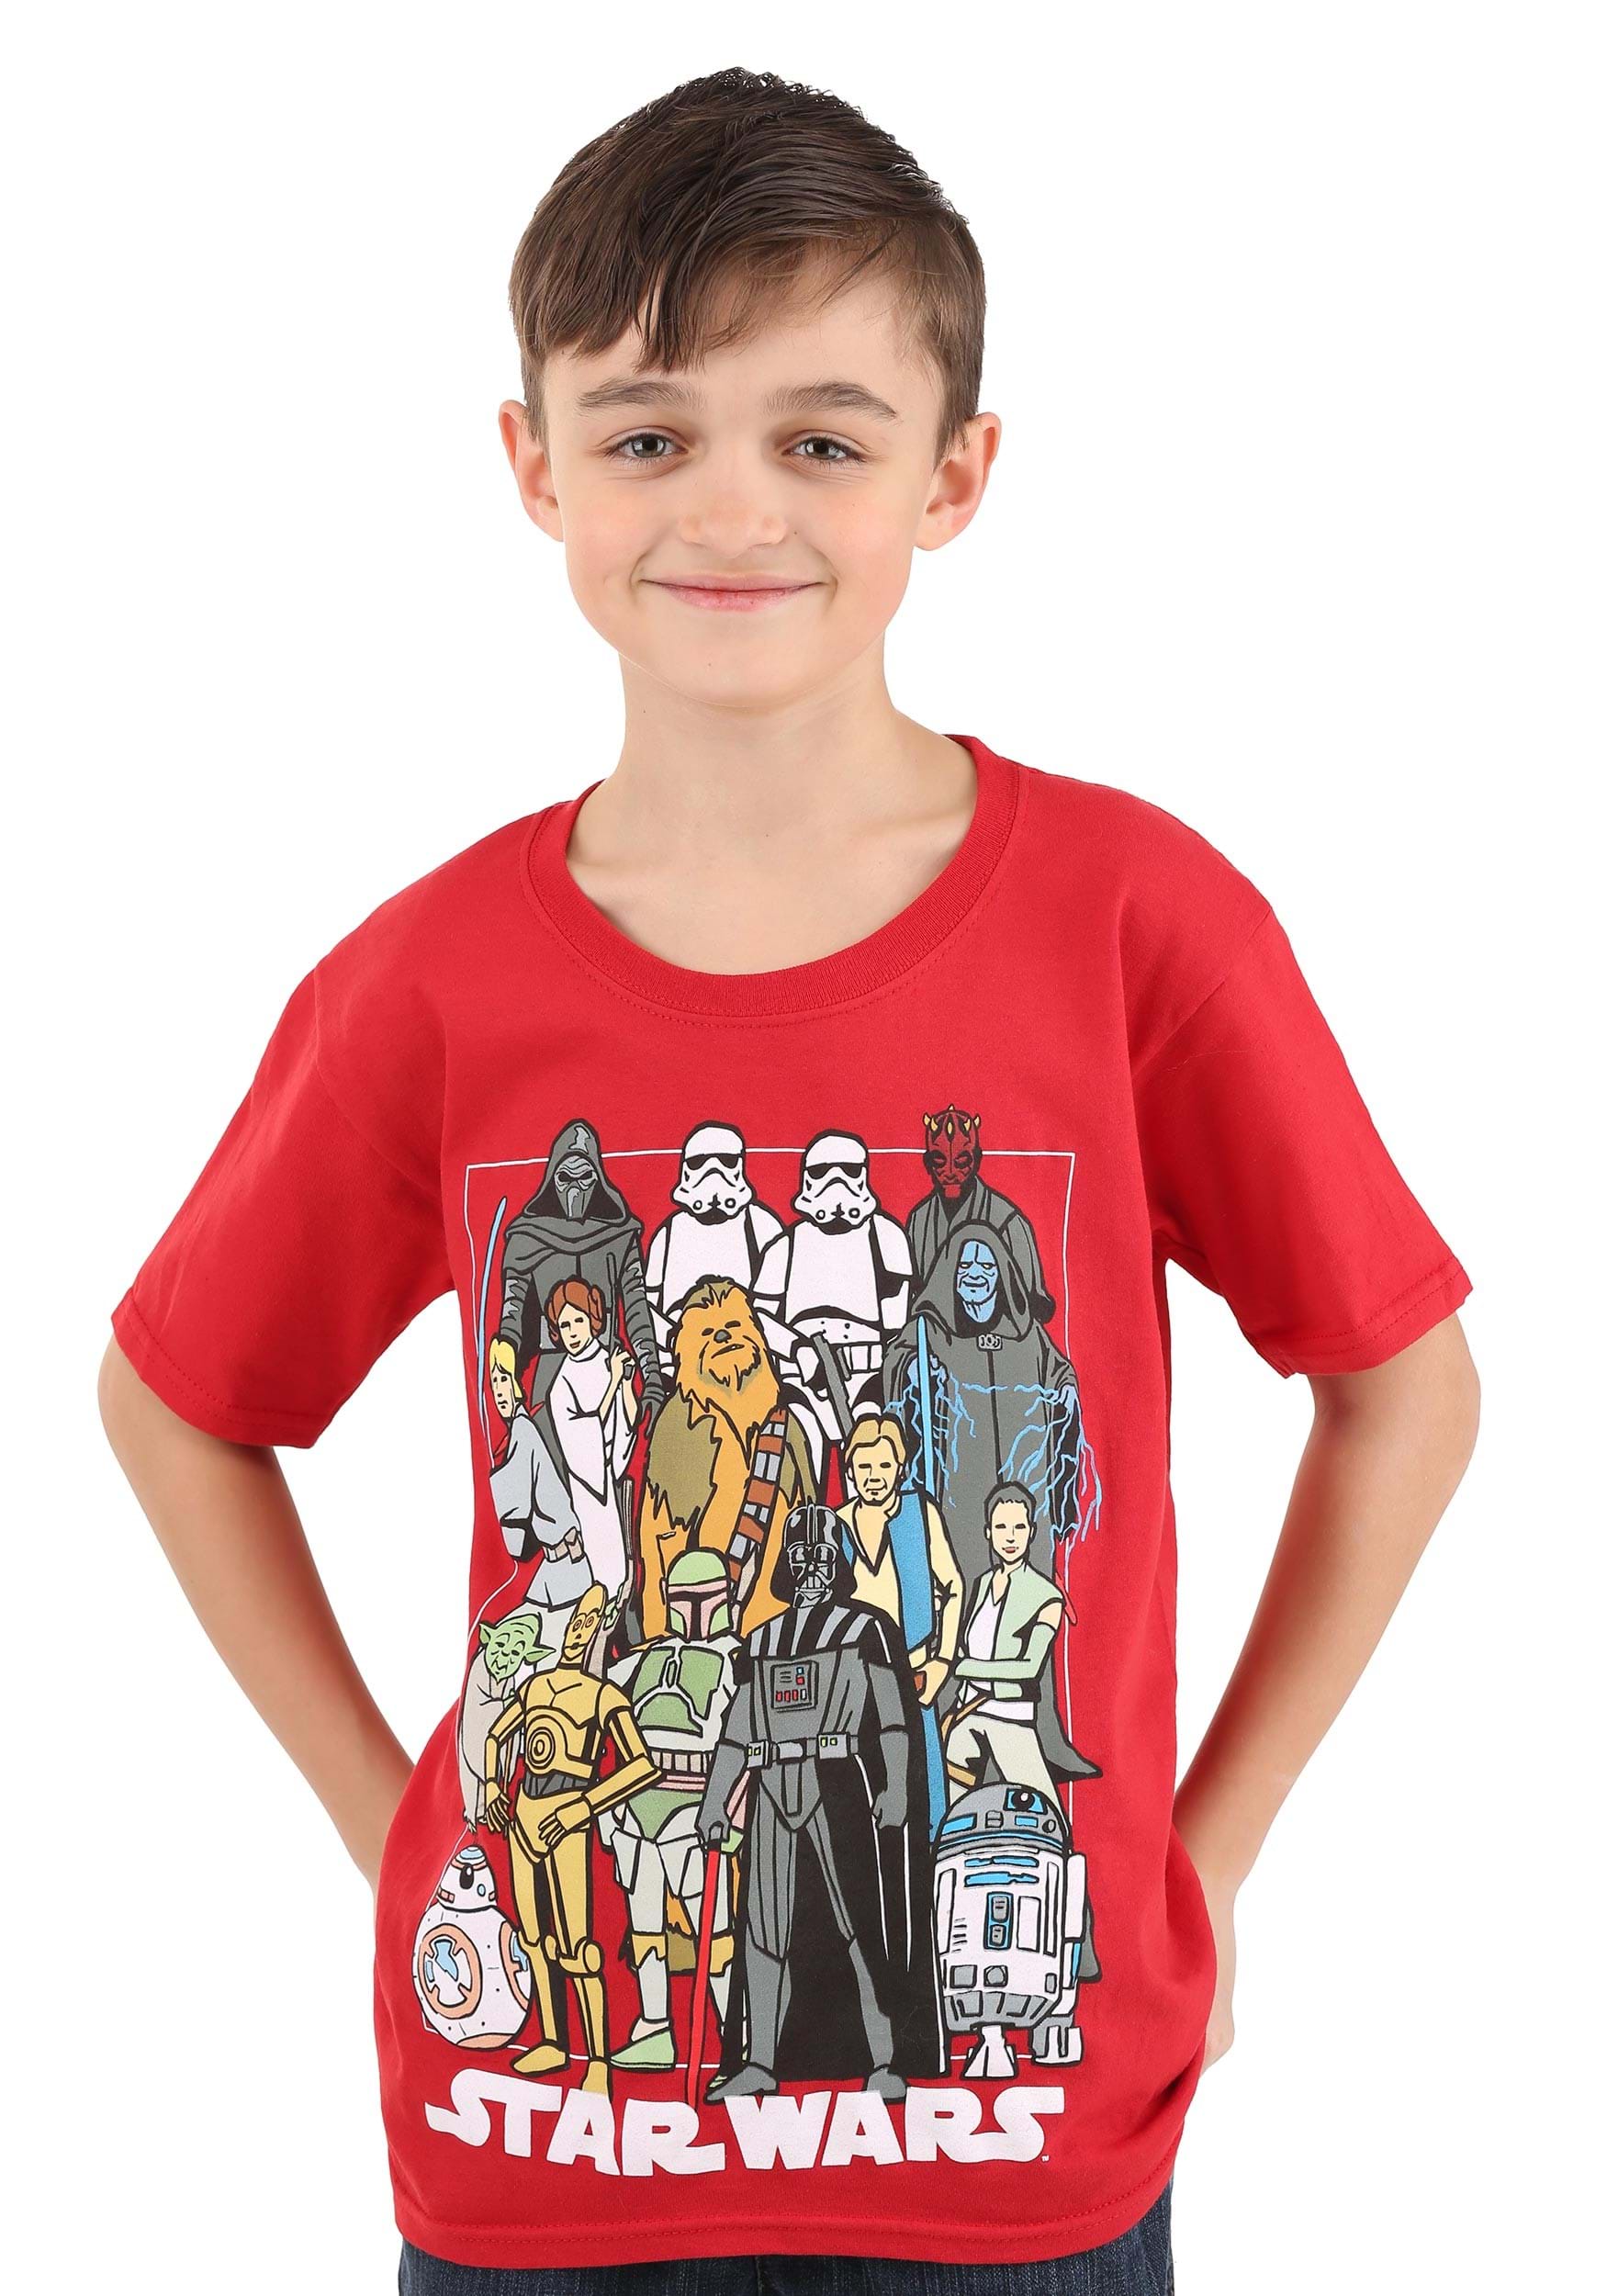 Star Wars Inspire dChildren's T-shirt Kids Top Star Wars Novelty T-hsirt Funny 